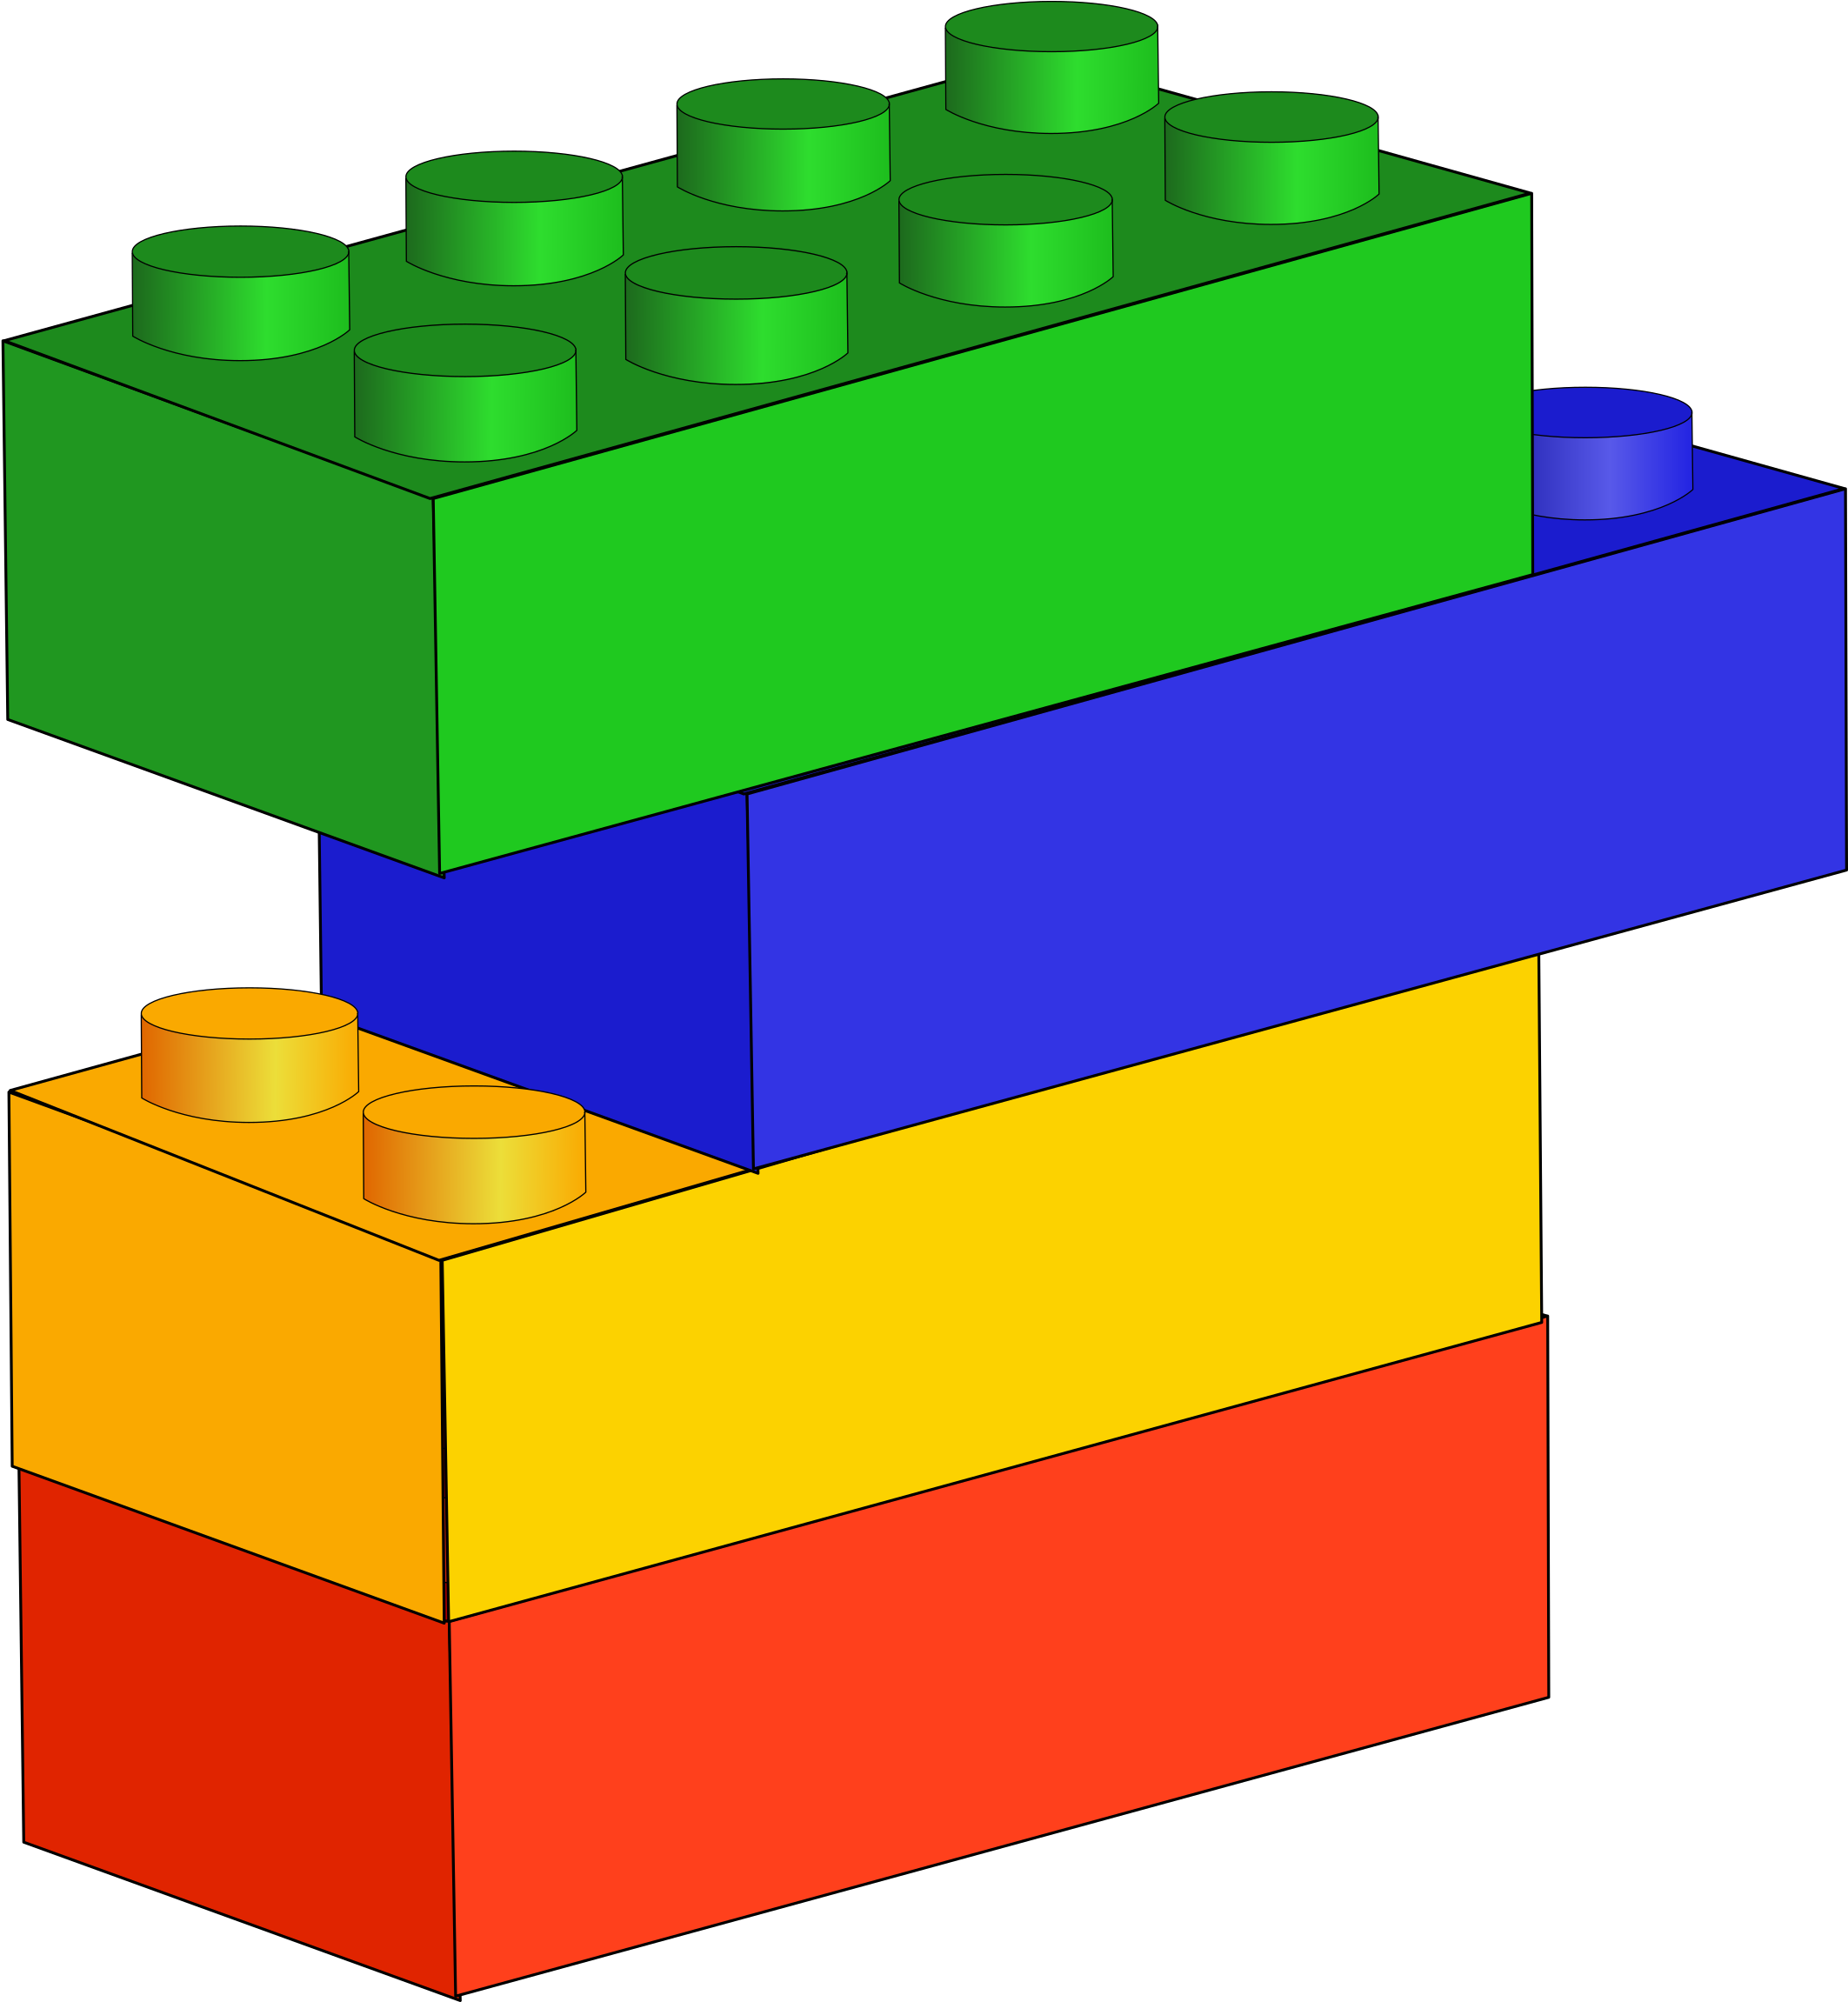 STEM Skills With Building Blocks